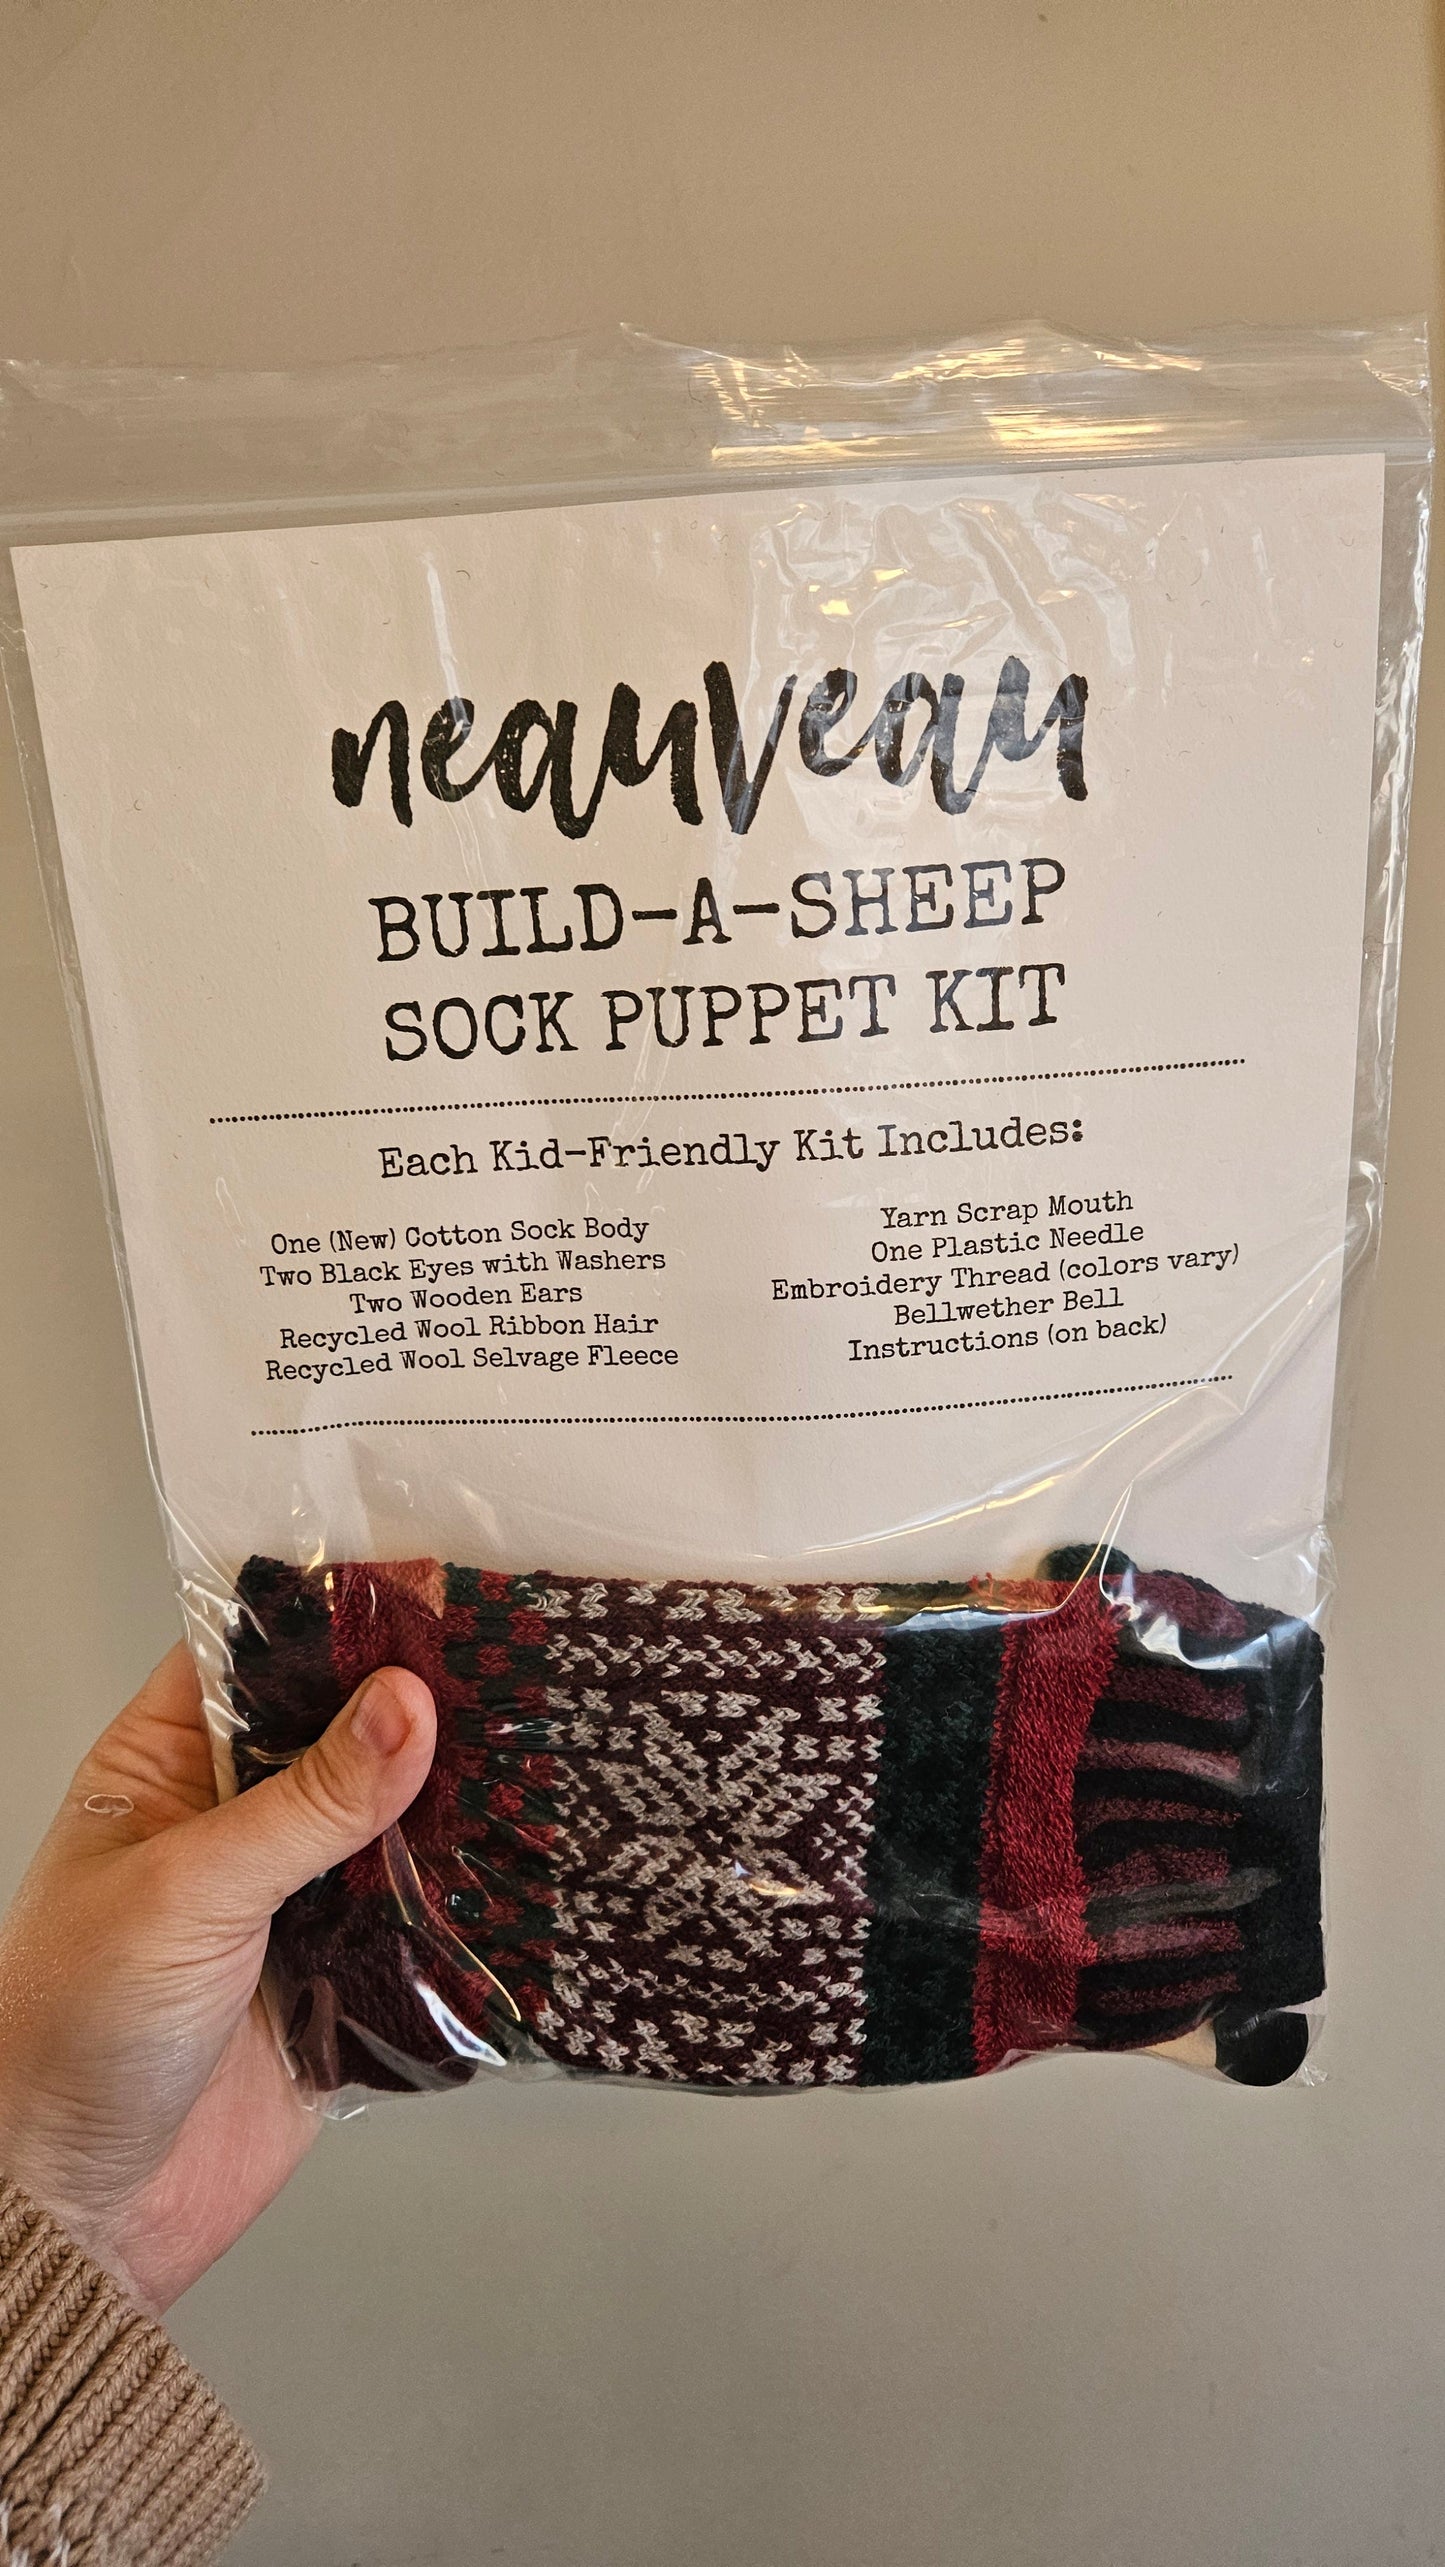 Build-A-Sheep Solmate Sock Puppet Kit - Hygge Sheep